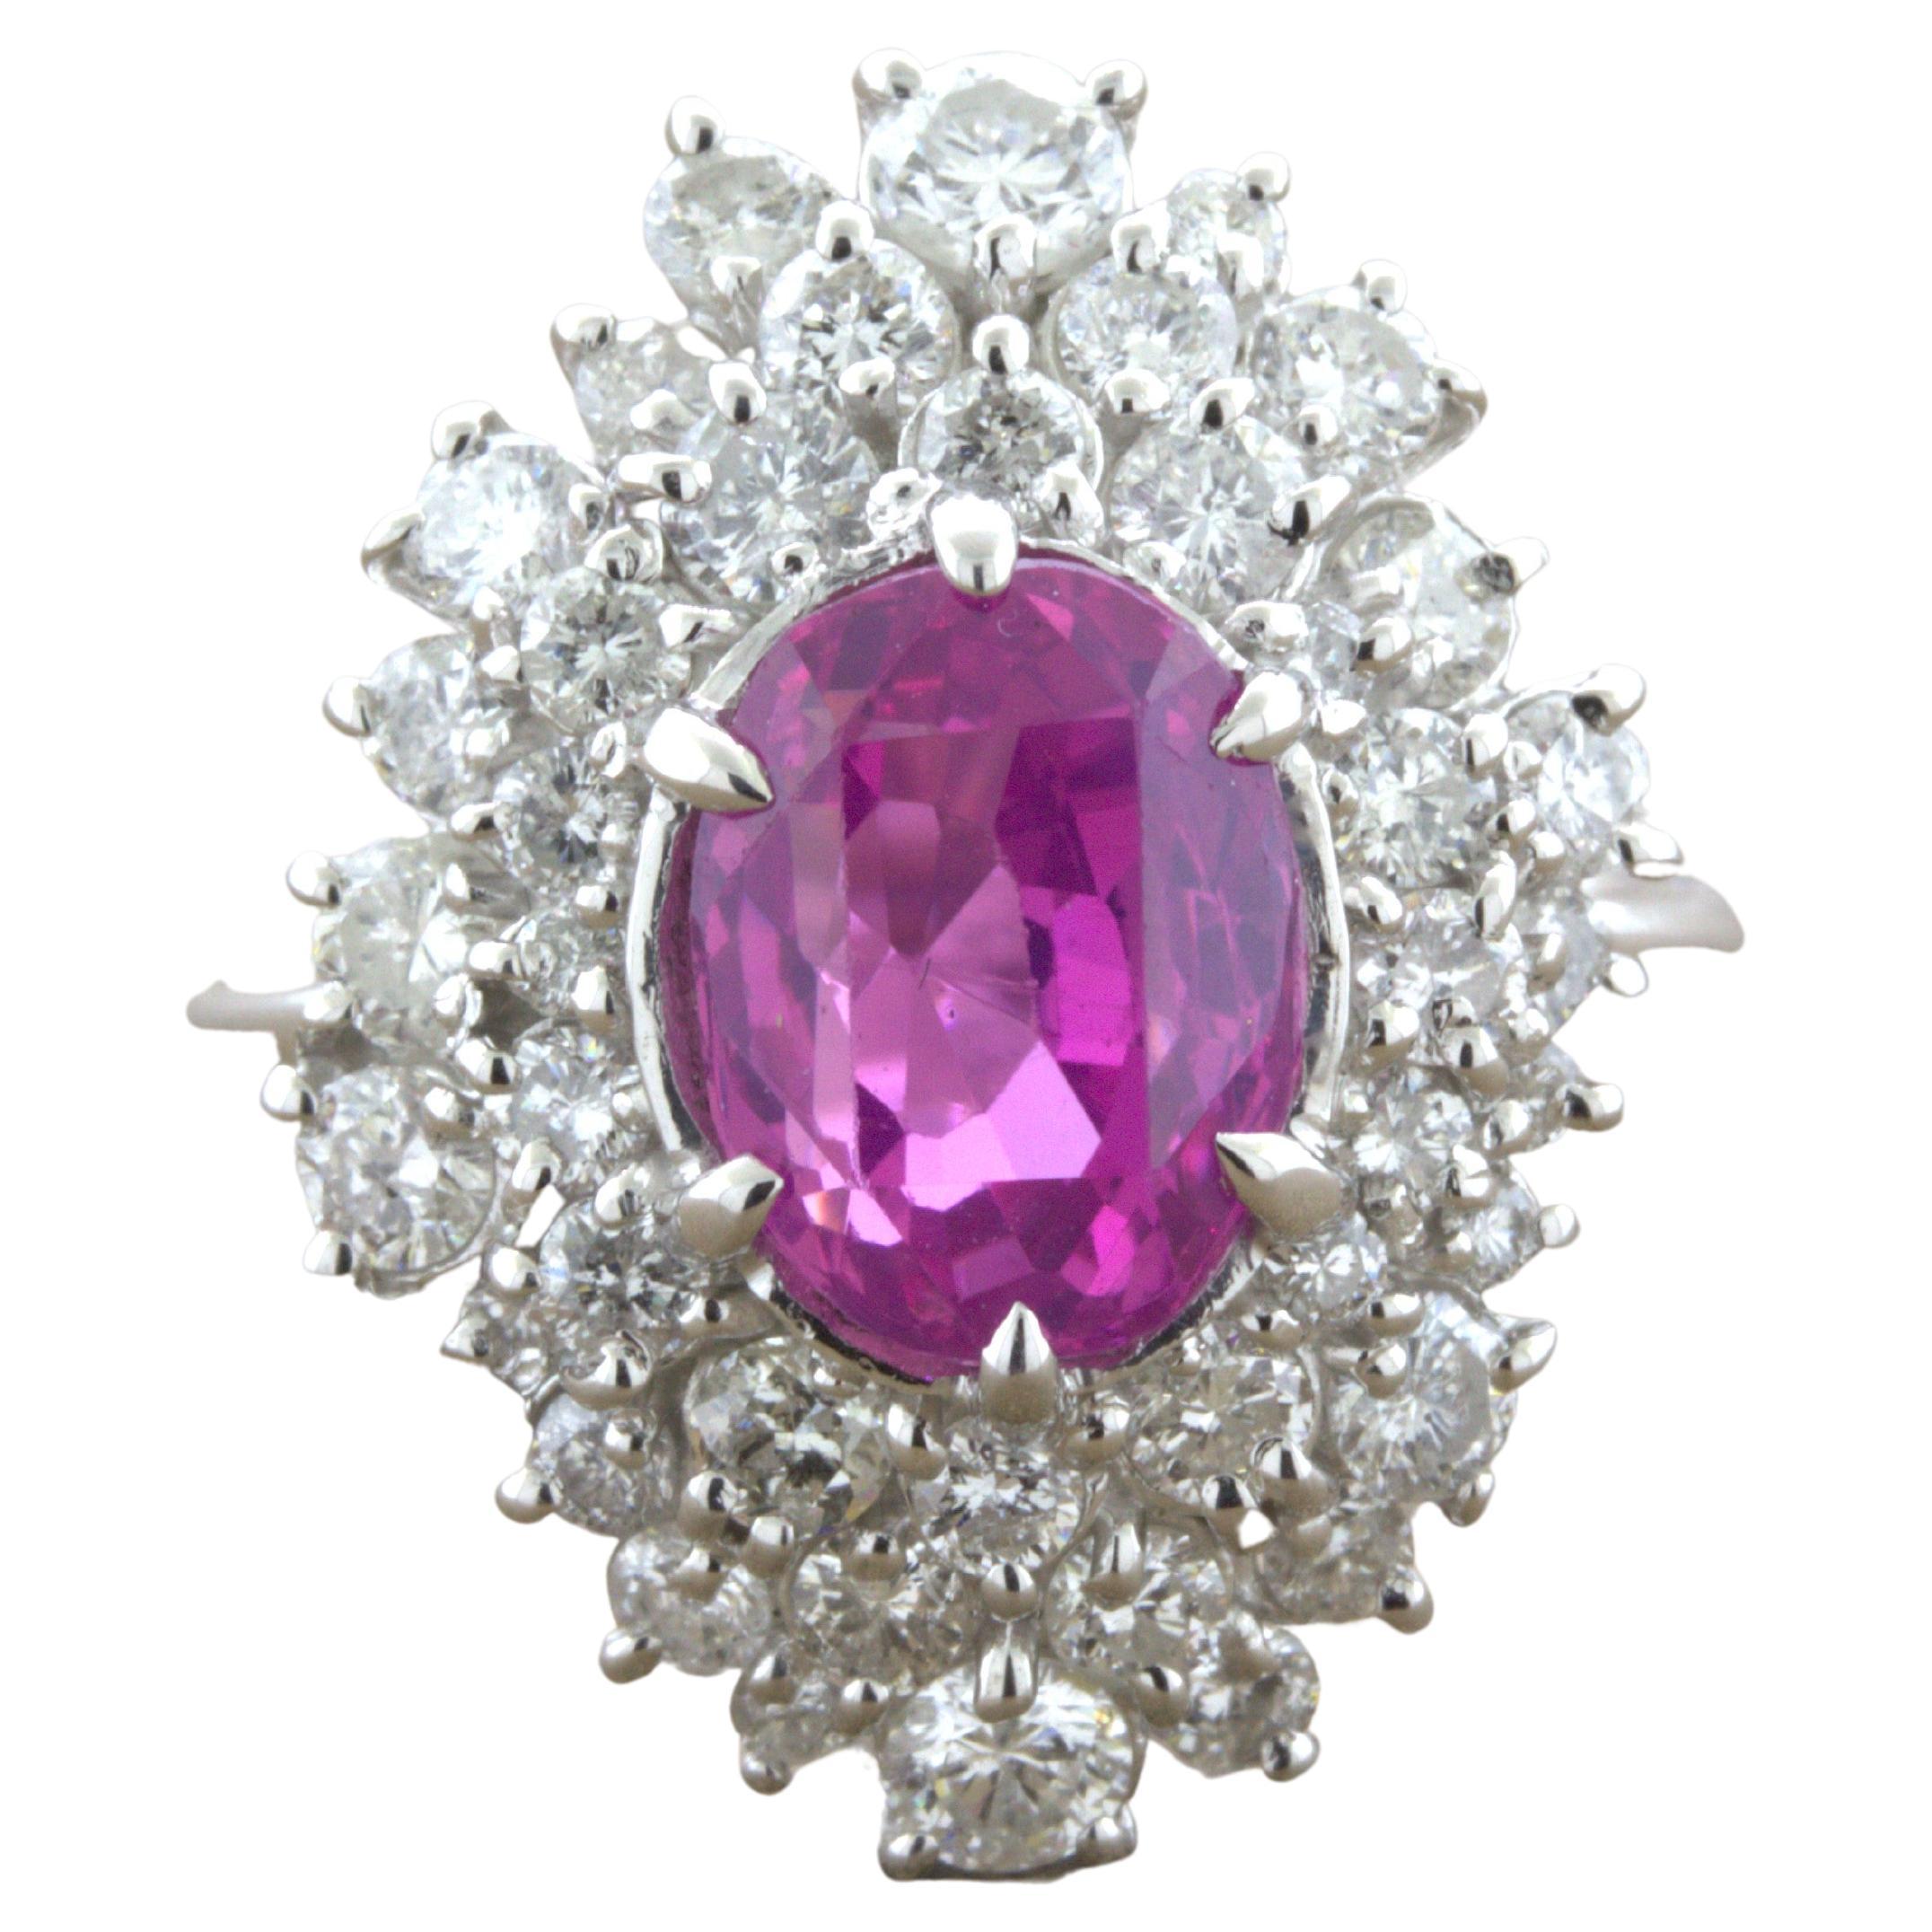 4.25 Carat “Barbie Pink” Sapphire Diamond Platinum Ring, GIA Certified For Sale